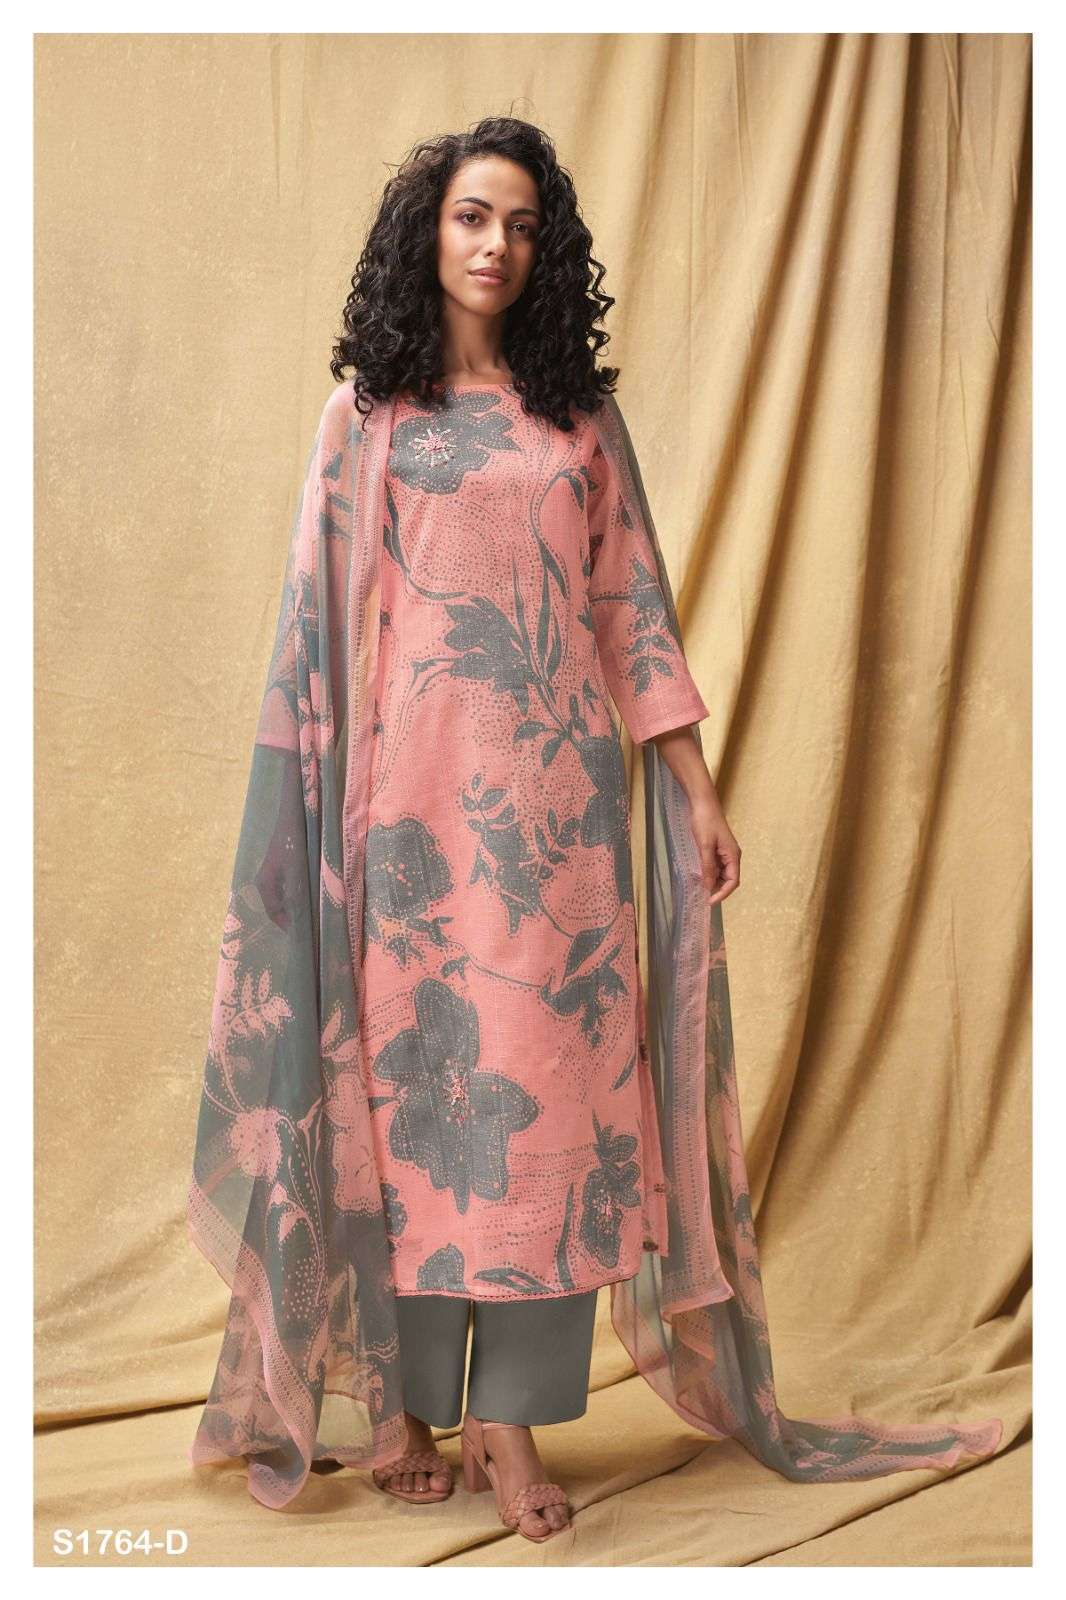 ganga chamak 1764 series stylish designer top bottom with dupatta catalogue wholesaler surat